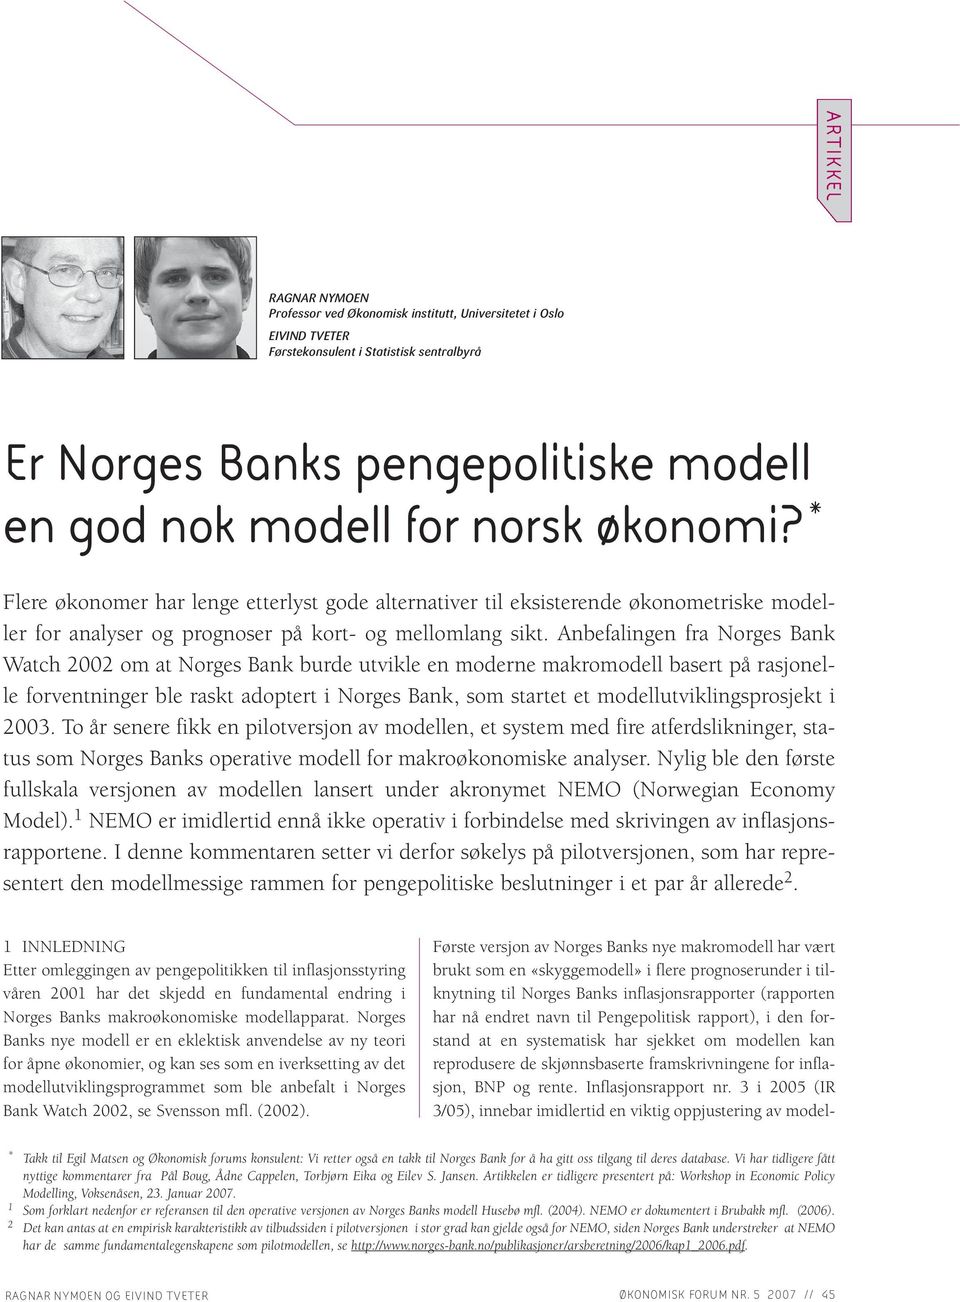 Anbefalingen fra Norges Bank Watch 2002 om at Norges Bank burde utvikle en moderne makromodell basert på rasjonelle forventninger ble raskt adoptert i Norges Bank, som startet et